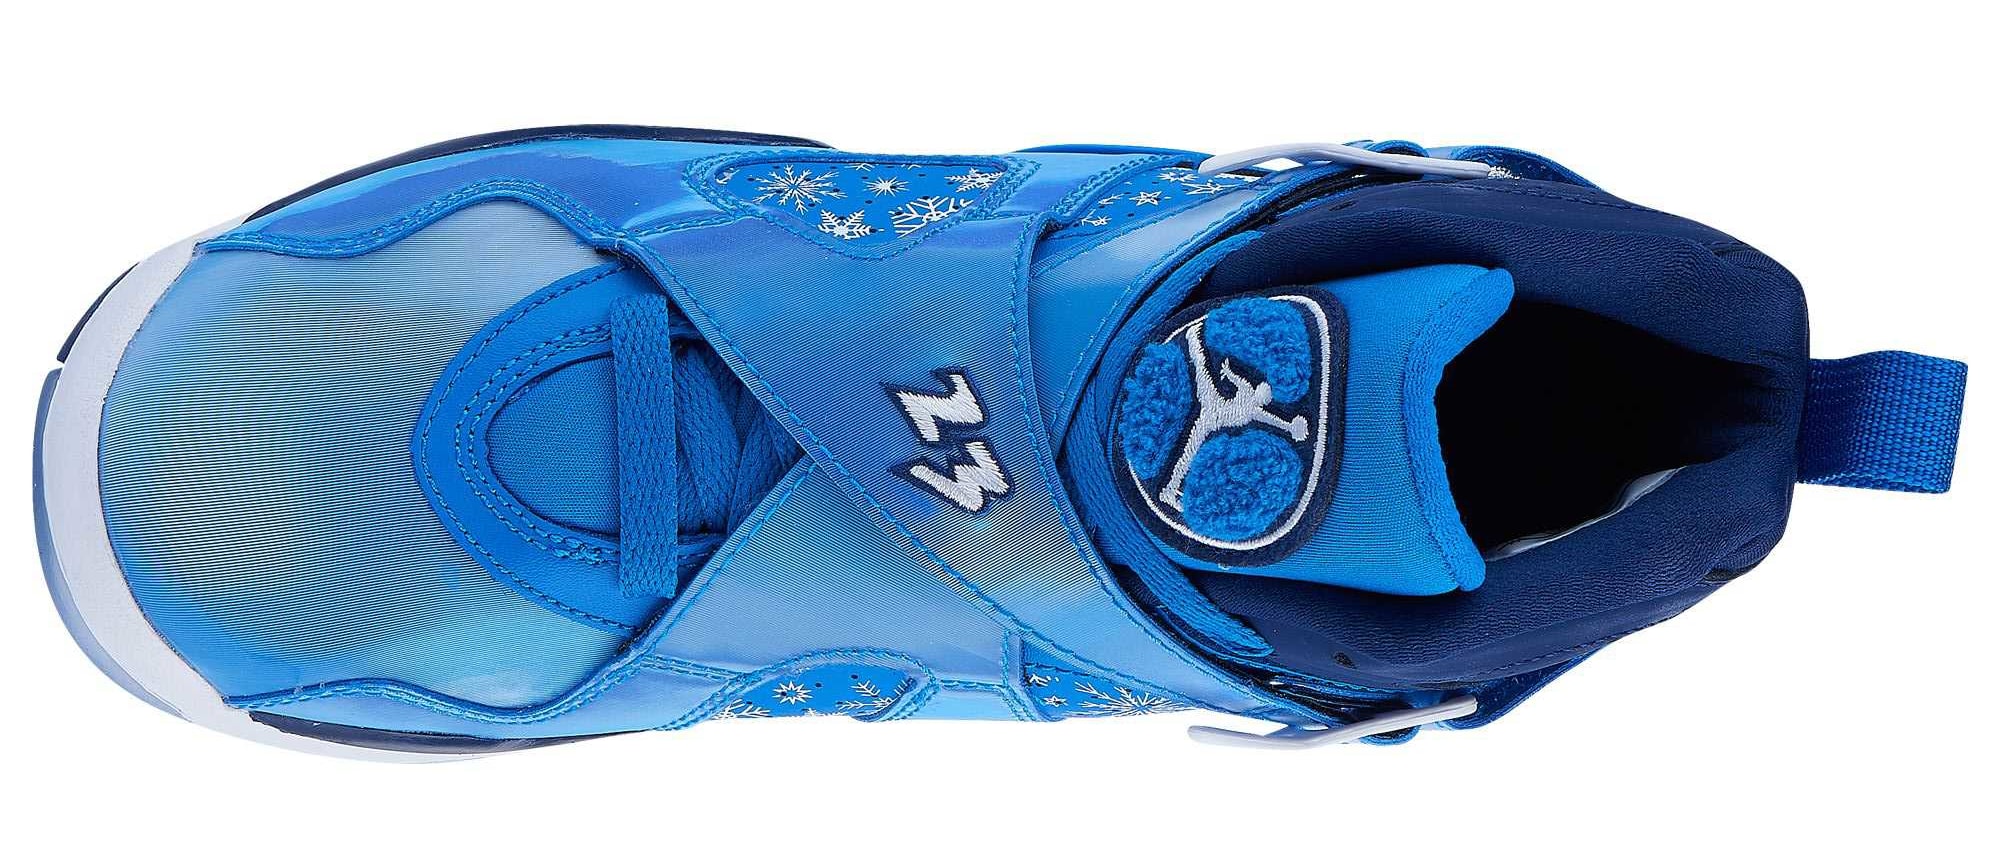 Air Jordan 8 VIII Snowflake Release Date 305368-400 Top